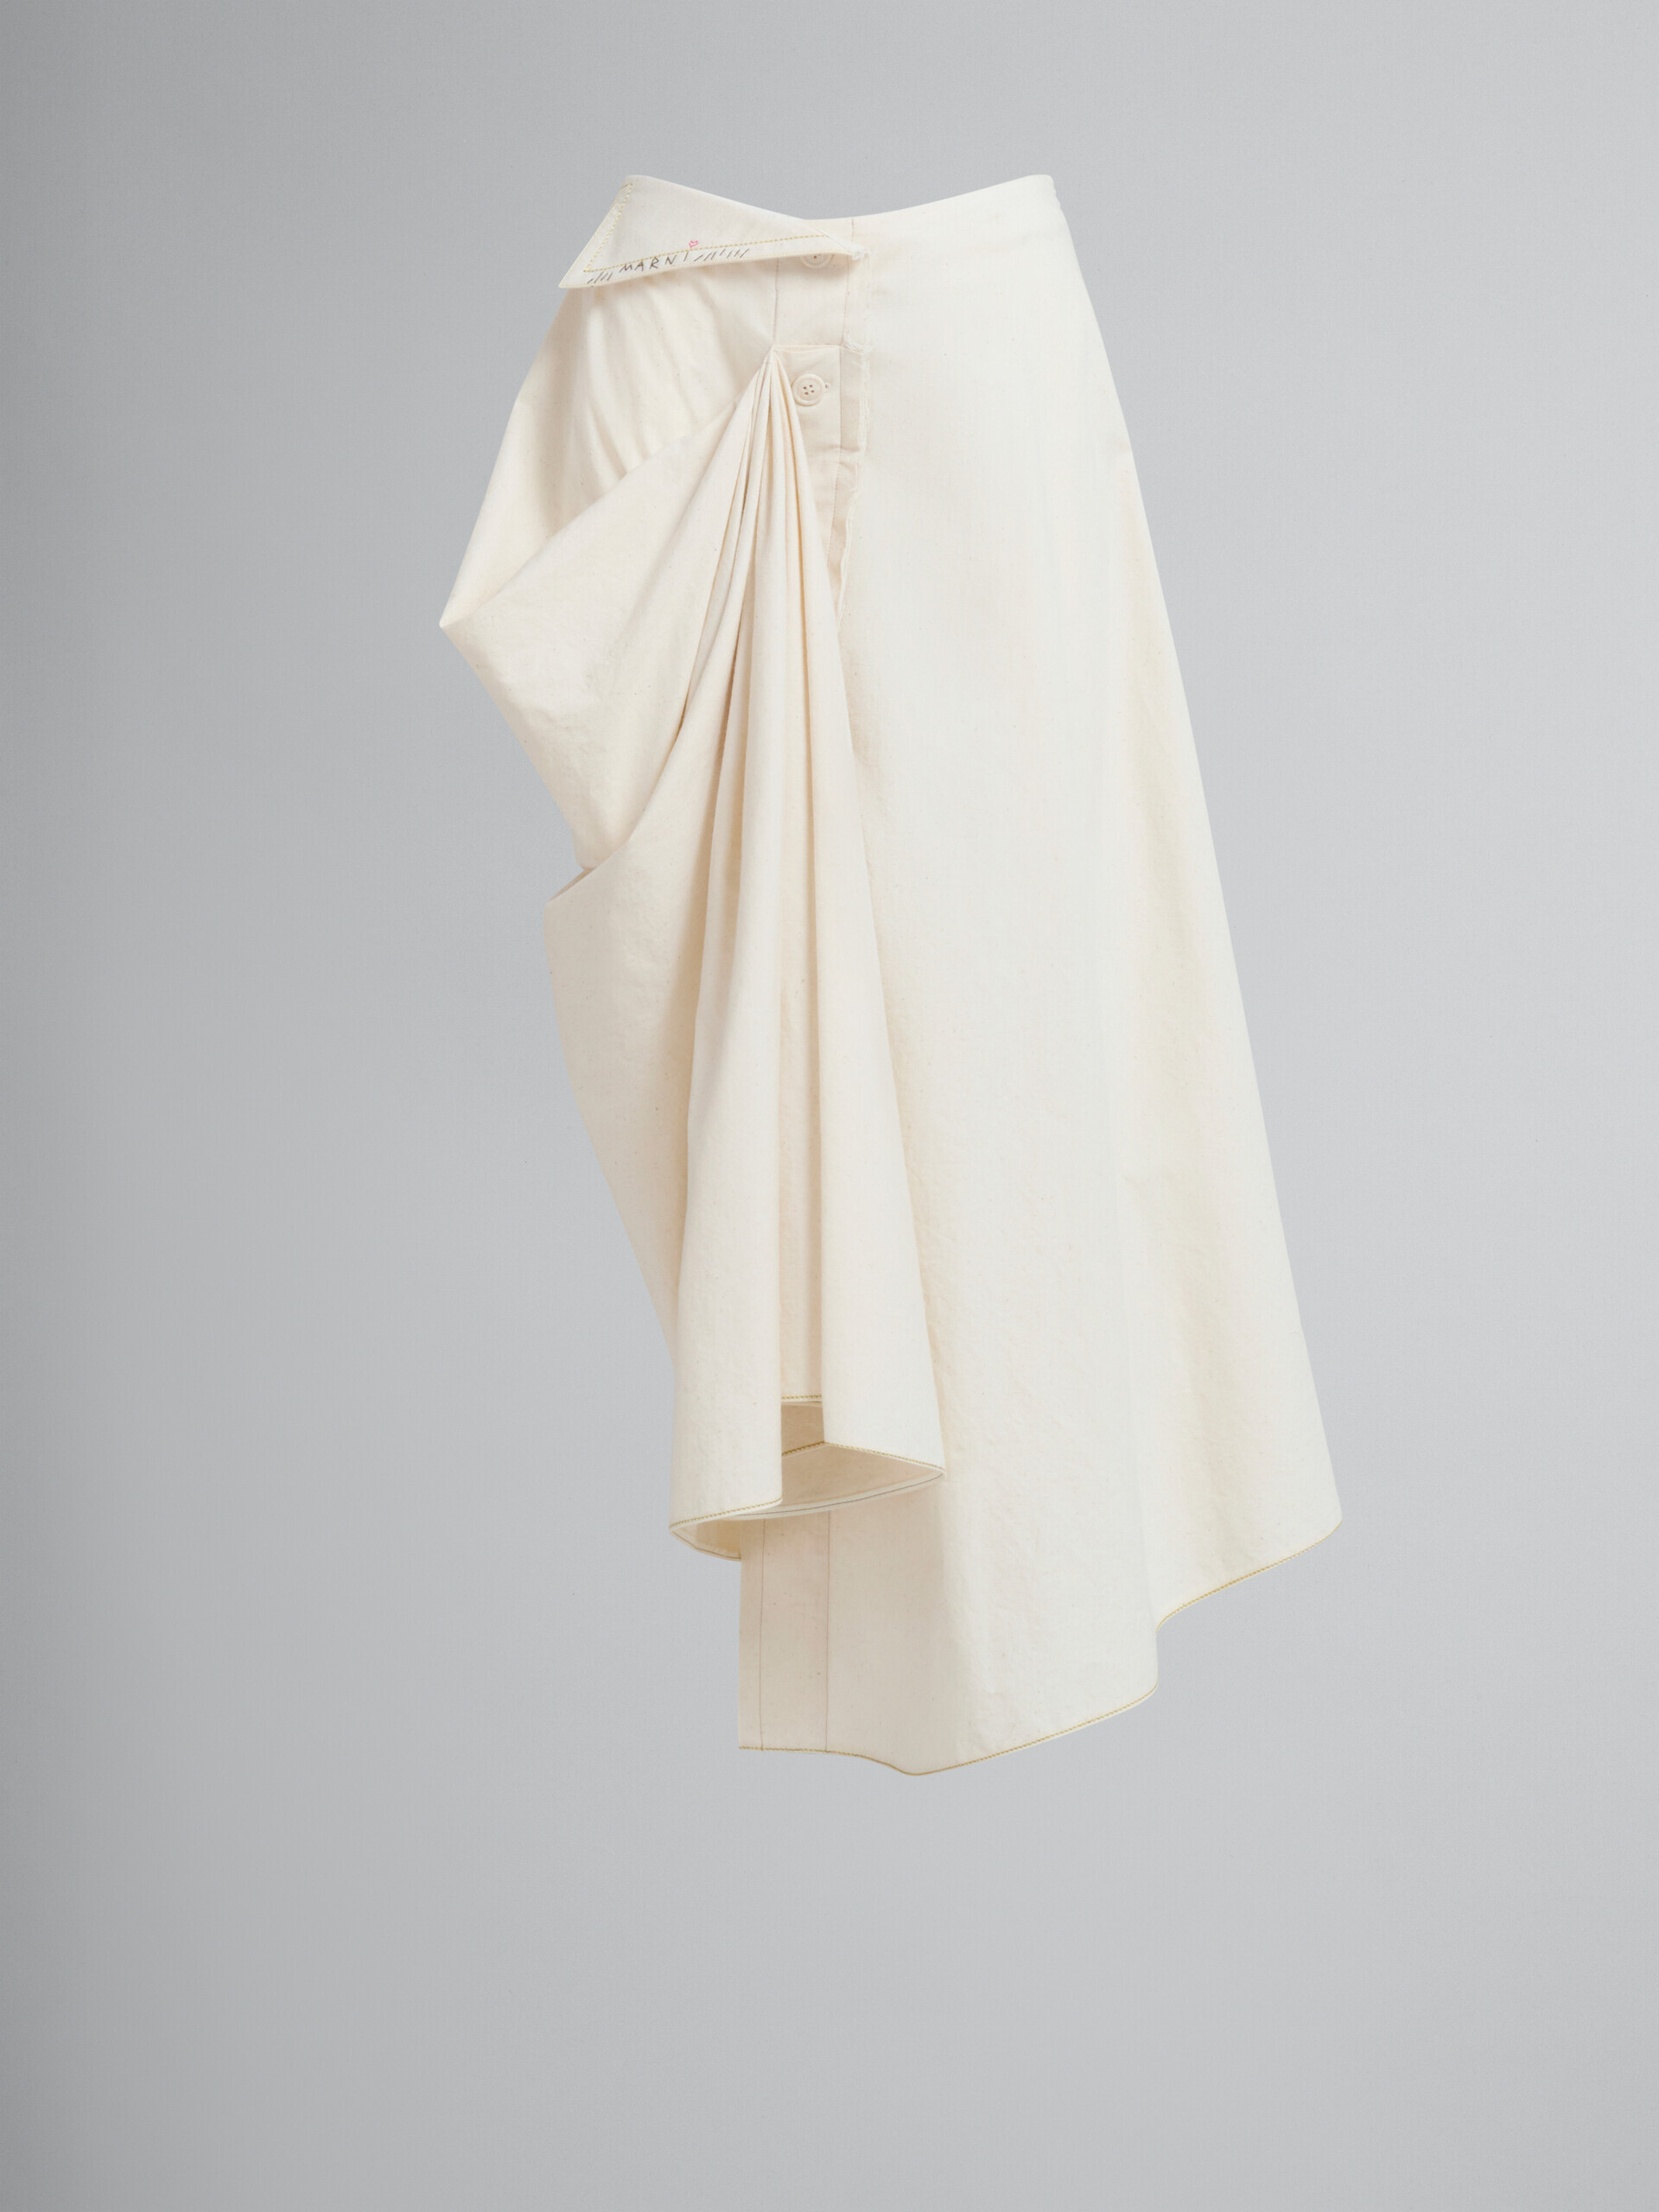 Light beige organic toile skirt with jacket lapels - Skirts - Image 2